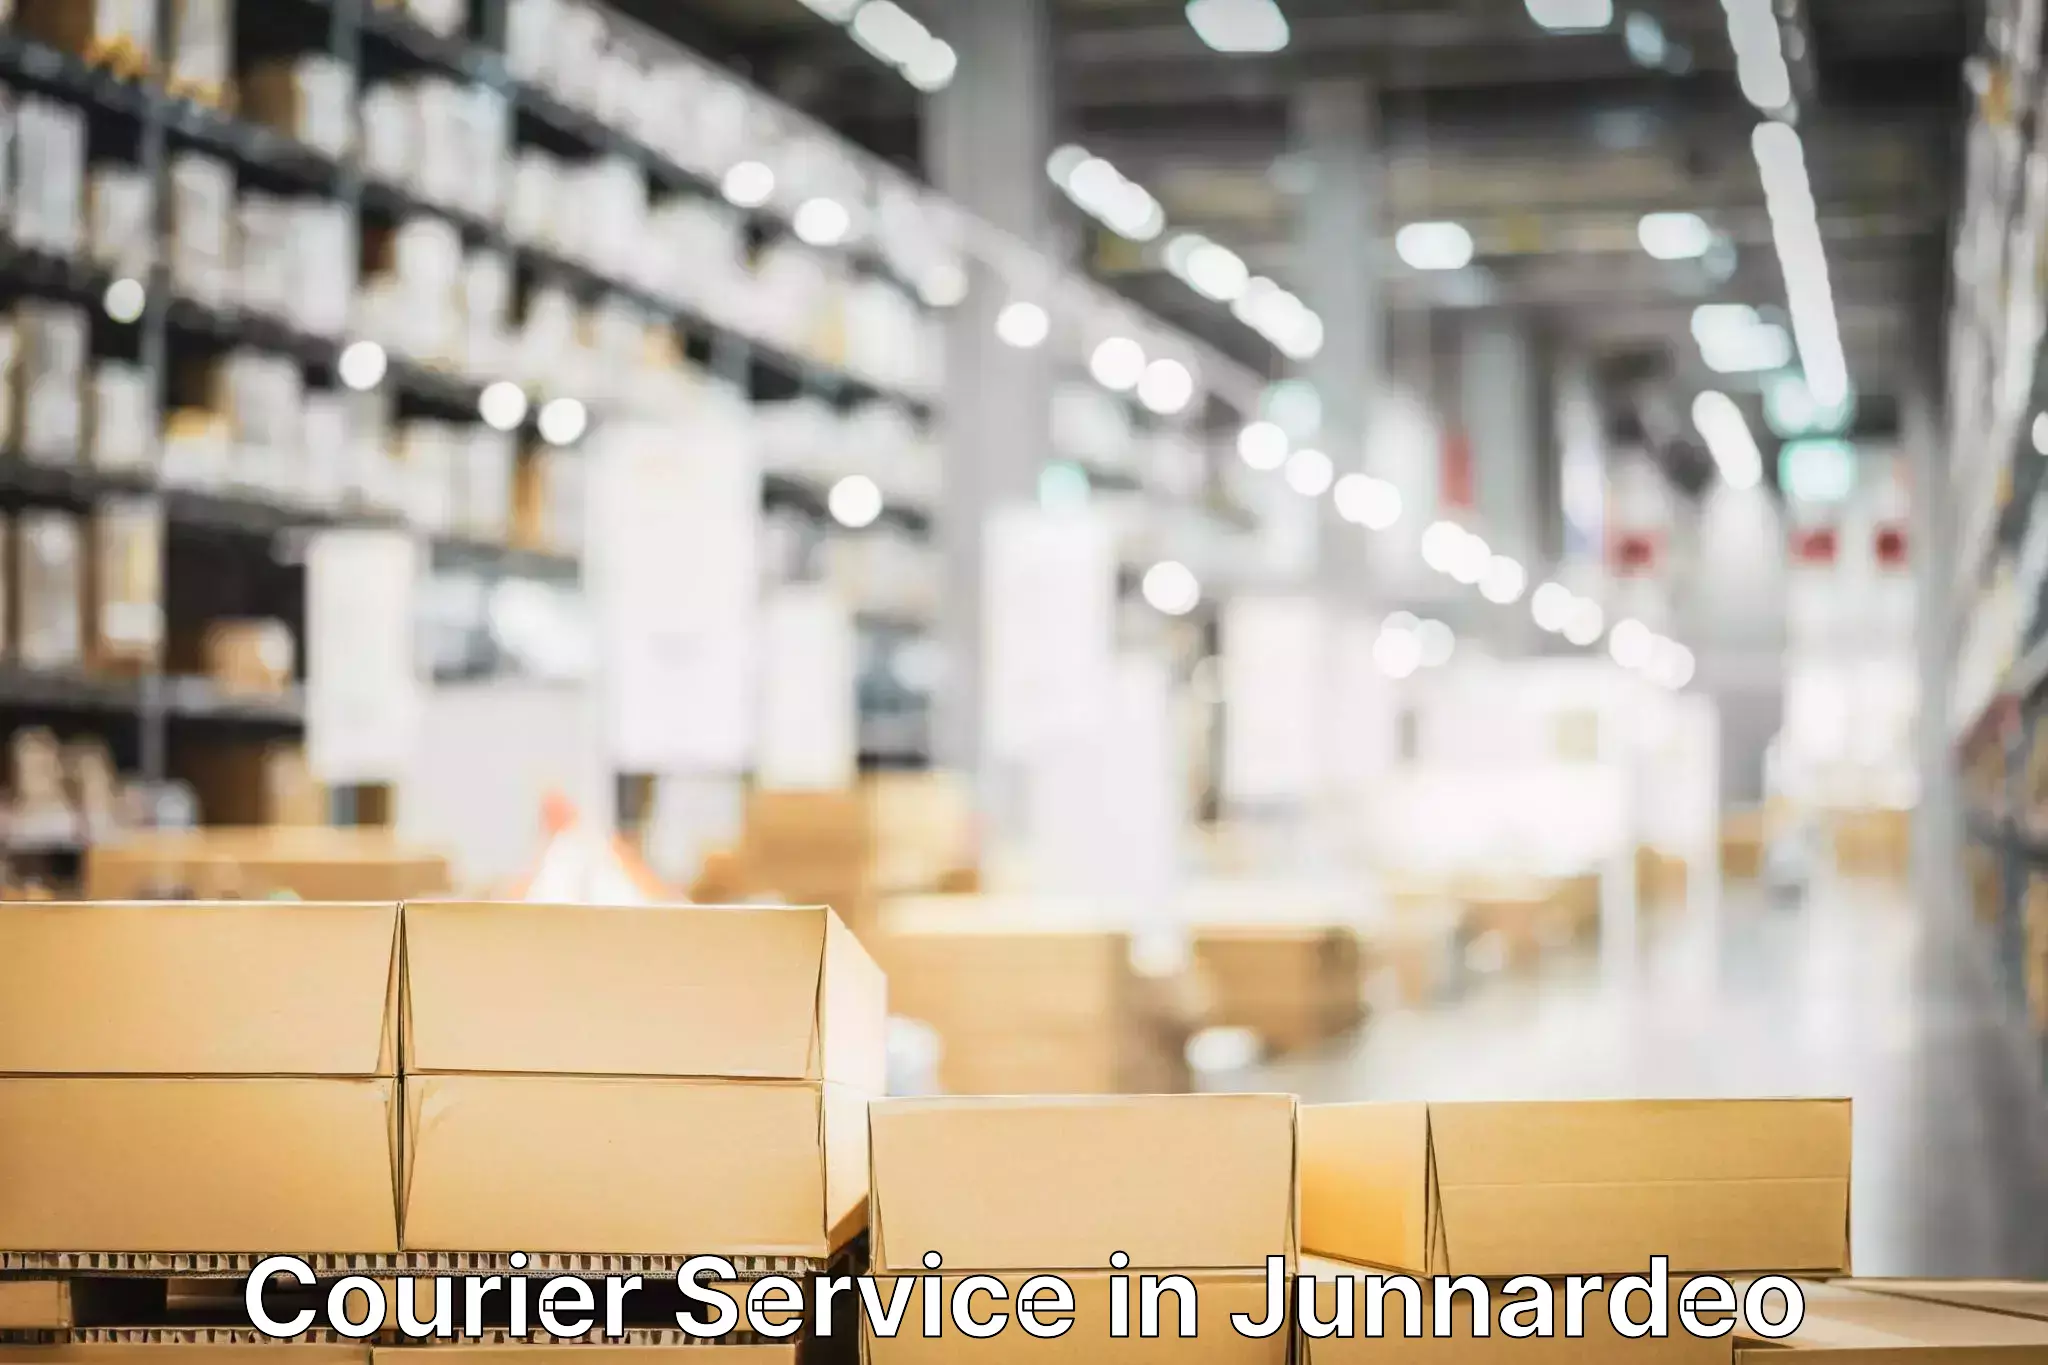 Courier service efficiency in Junnardeo